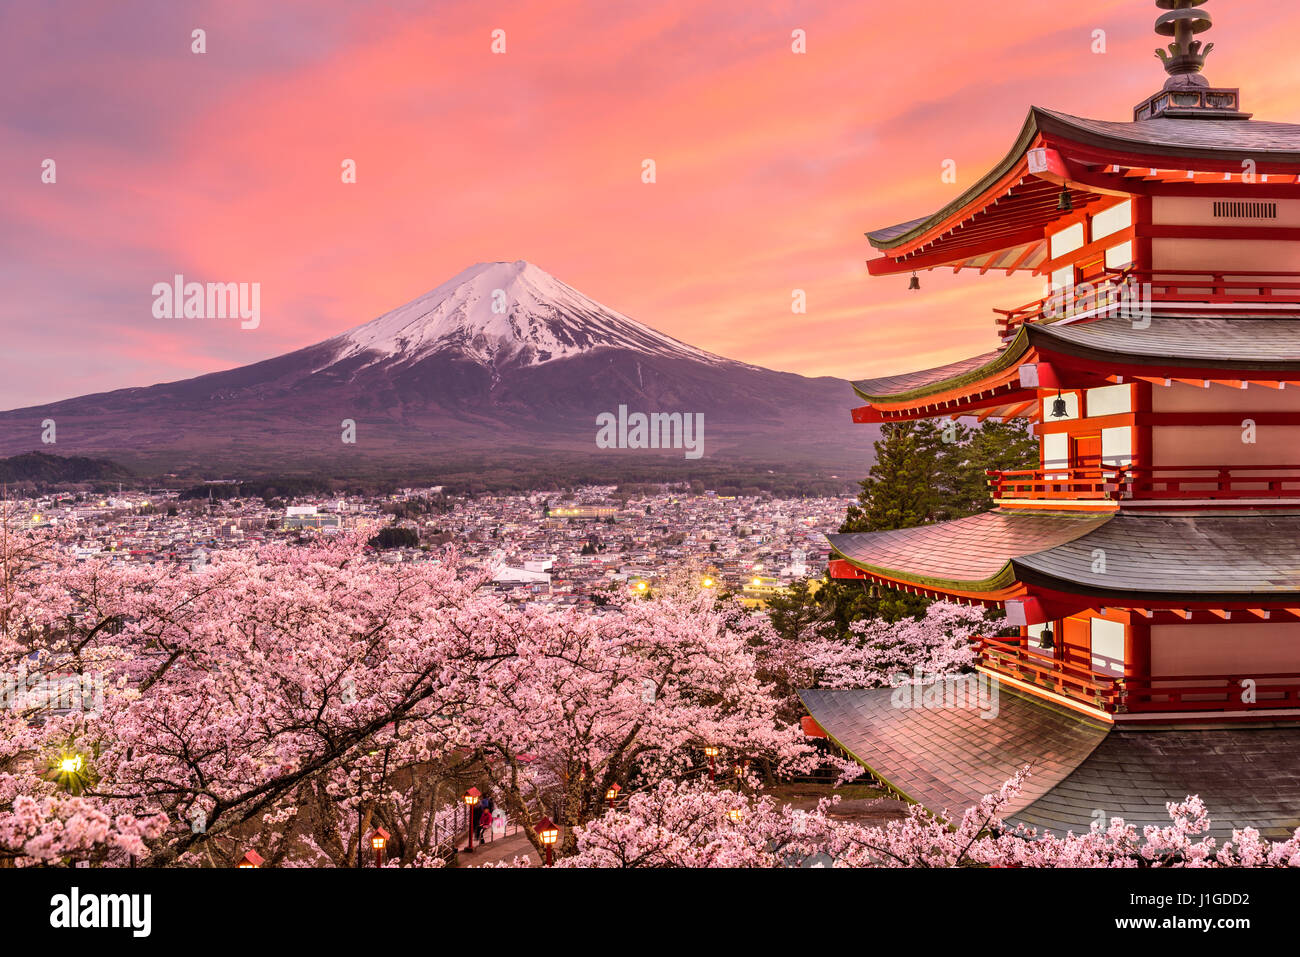 Fujiyoshida, Japan at Chureito Pagoda and Mt. Fuji in the spring with cherry blossoms. Stock Photo